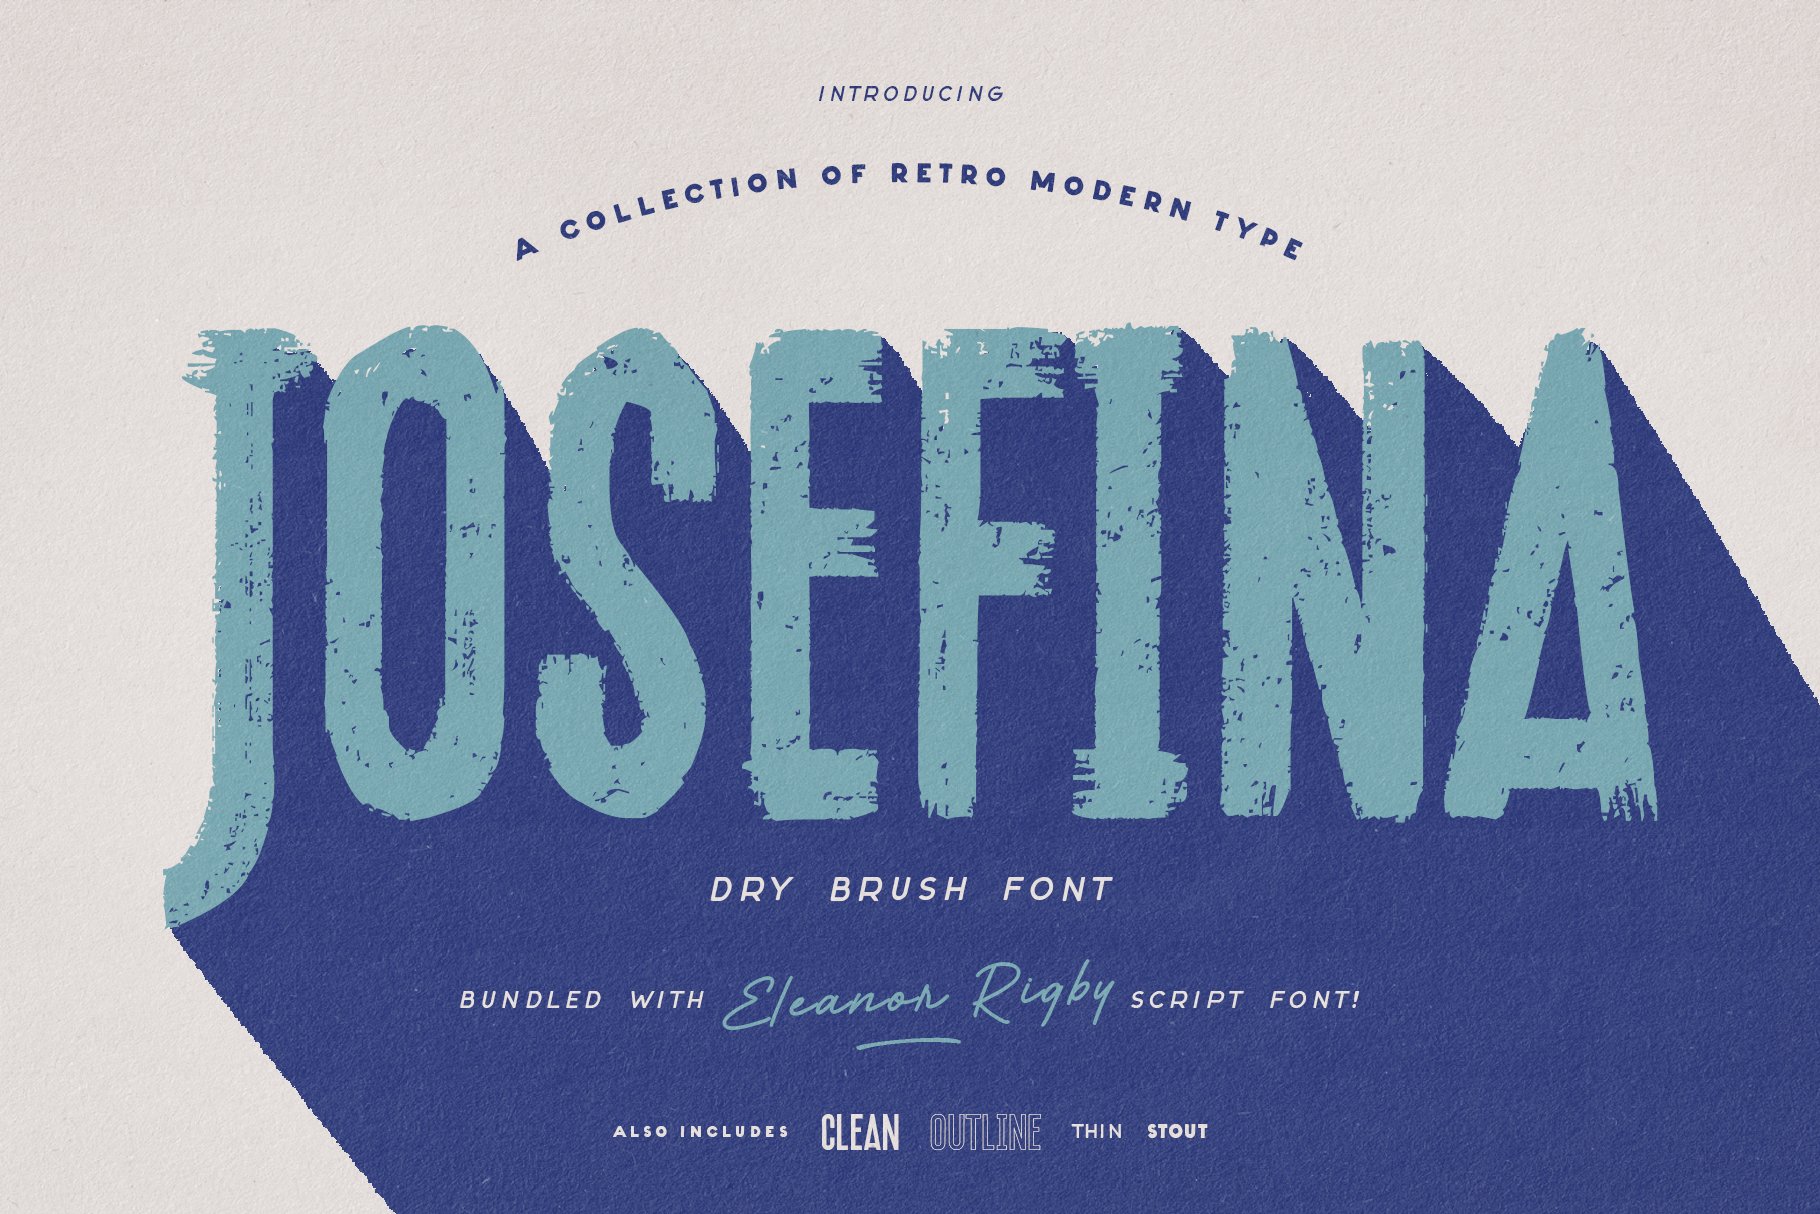 Josefina | Retro Modern Type Bundle cover image.